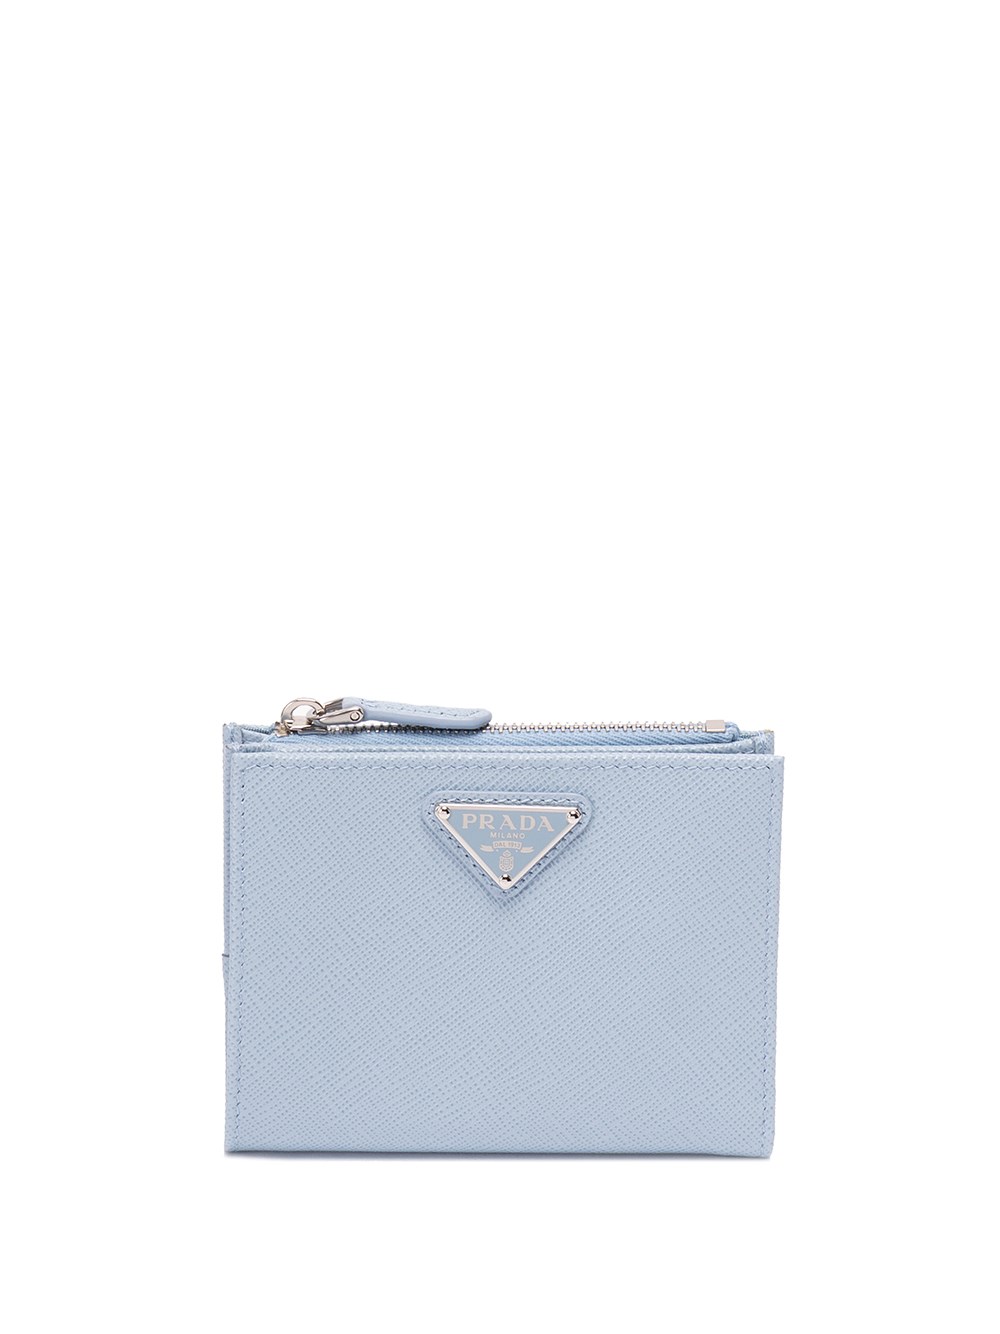 Prada Light Blue Saffiano Leather Small Wallet